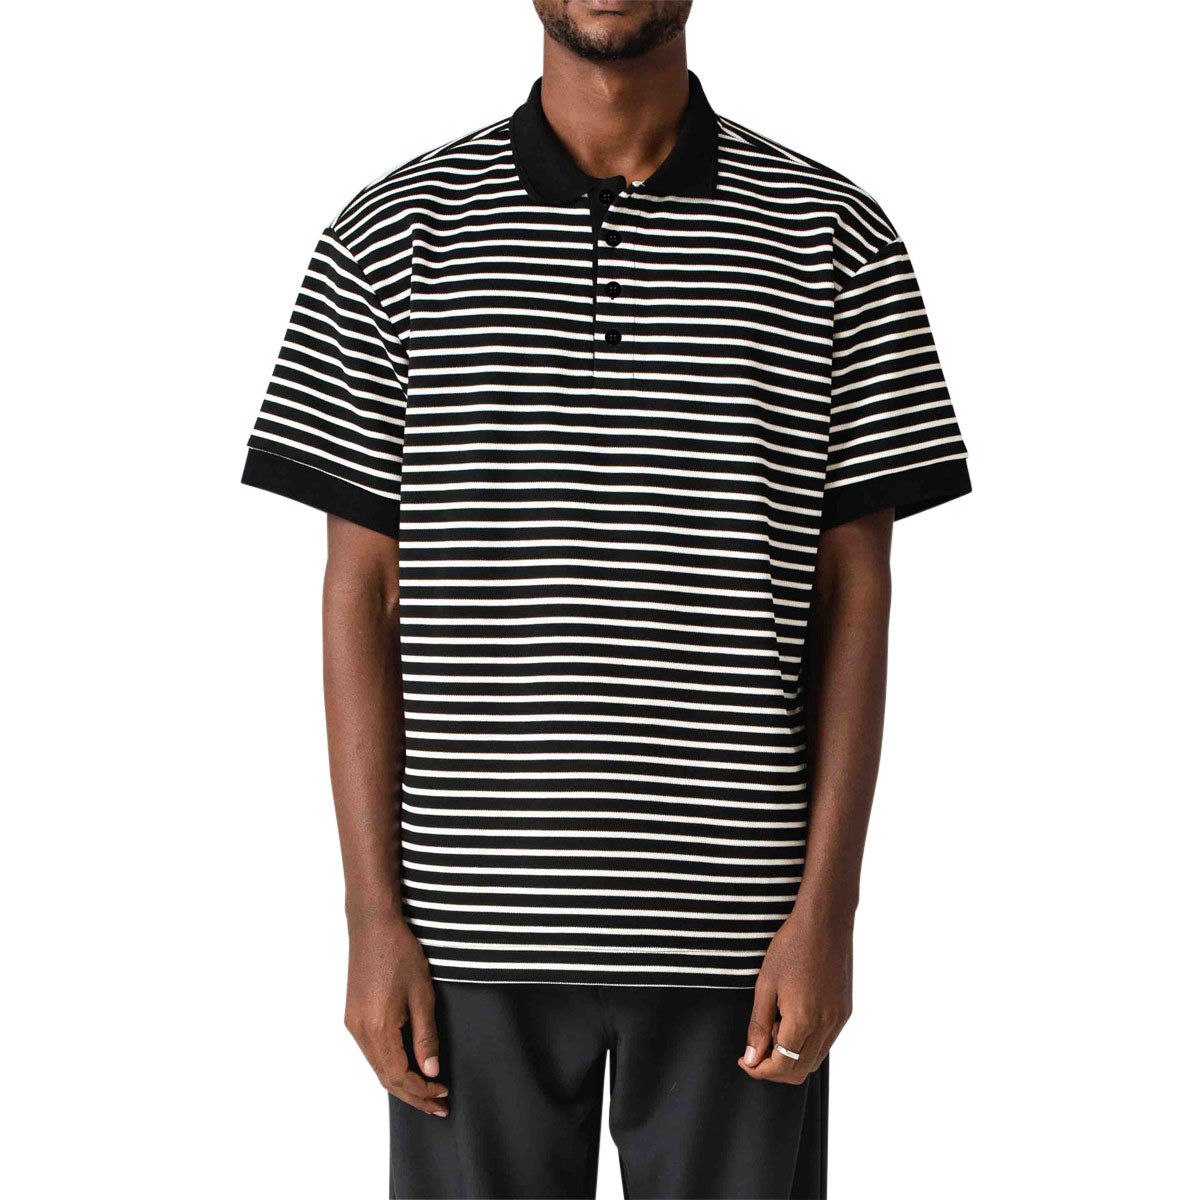 Former Uniform Striped Polo Shirt - Worn Black/White image 1